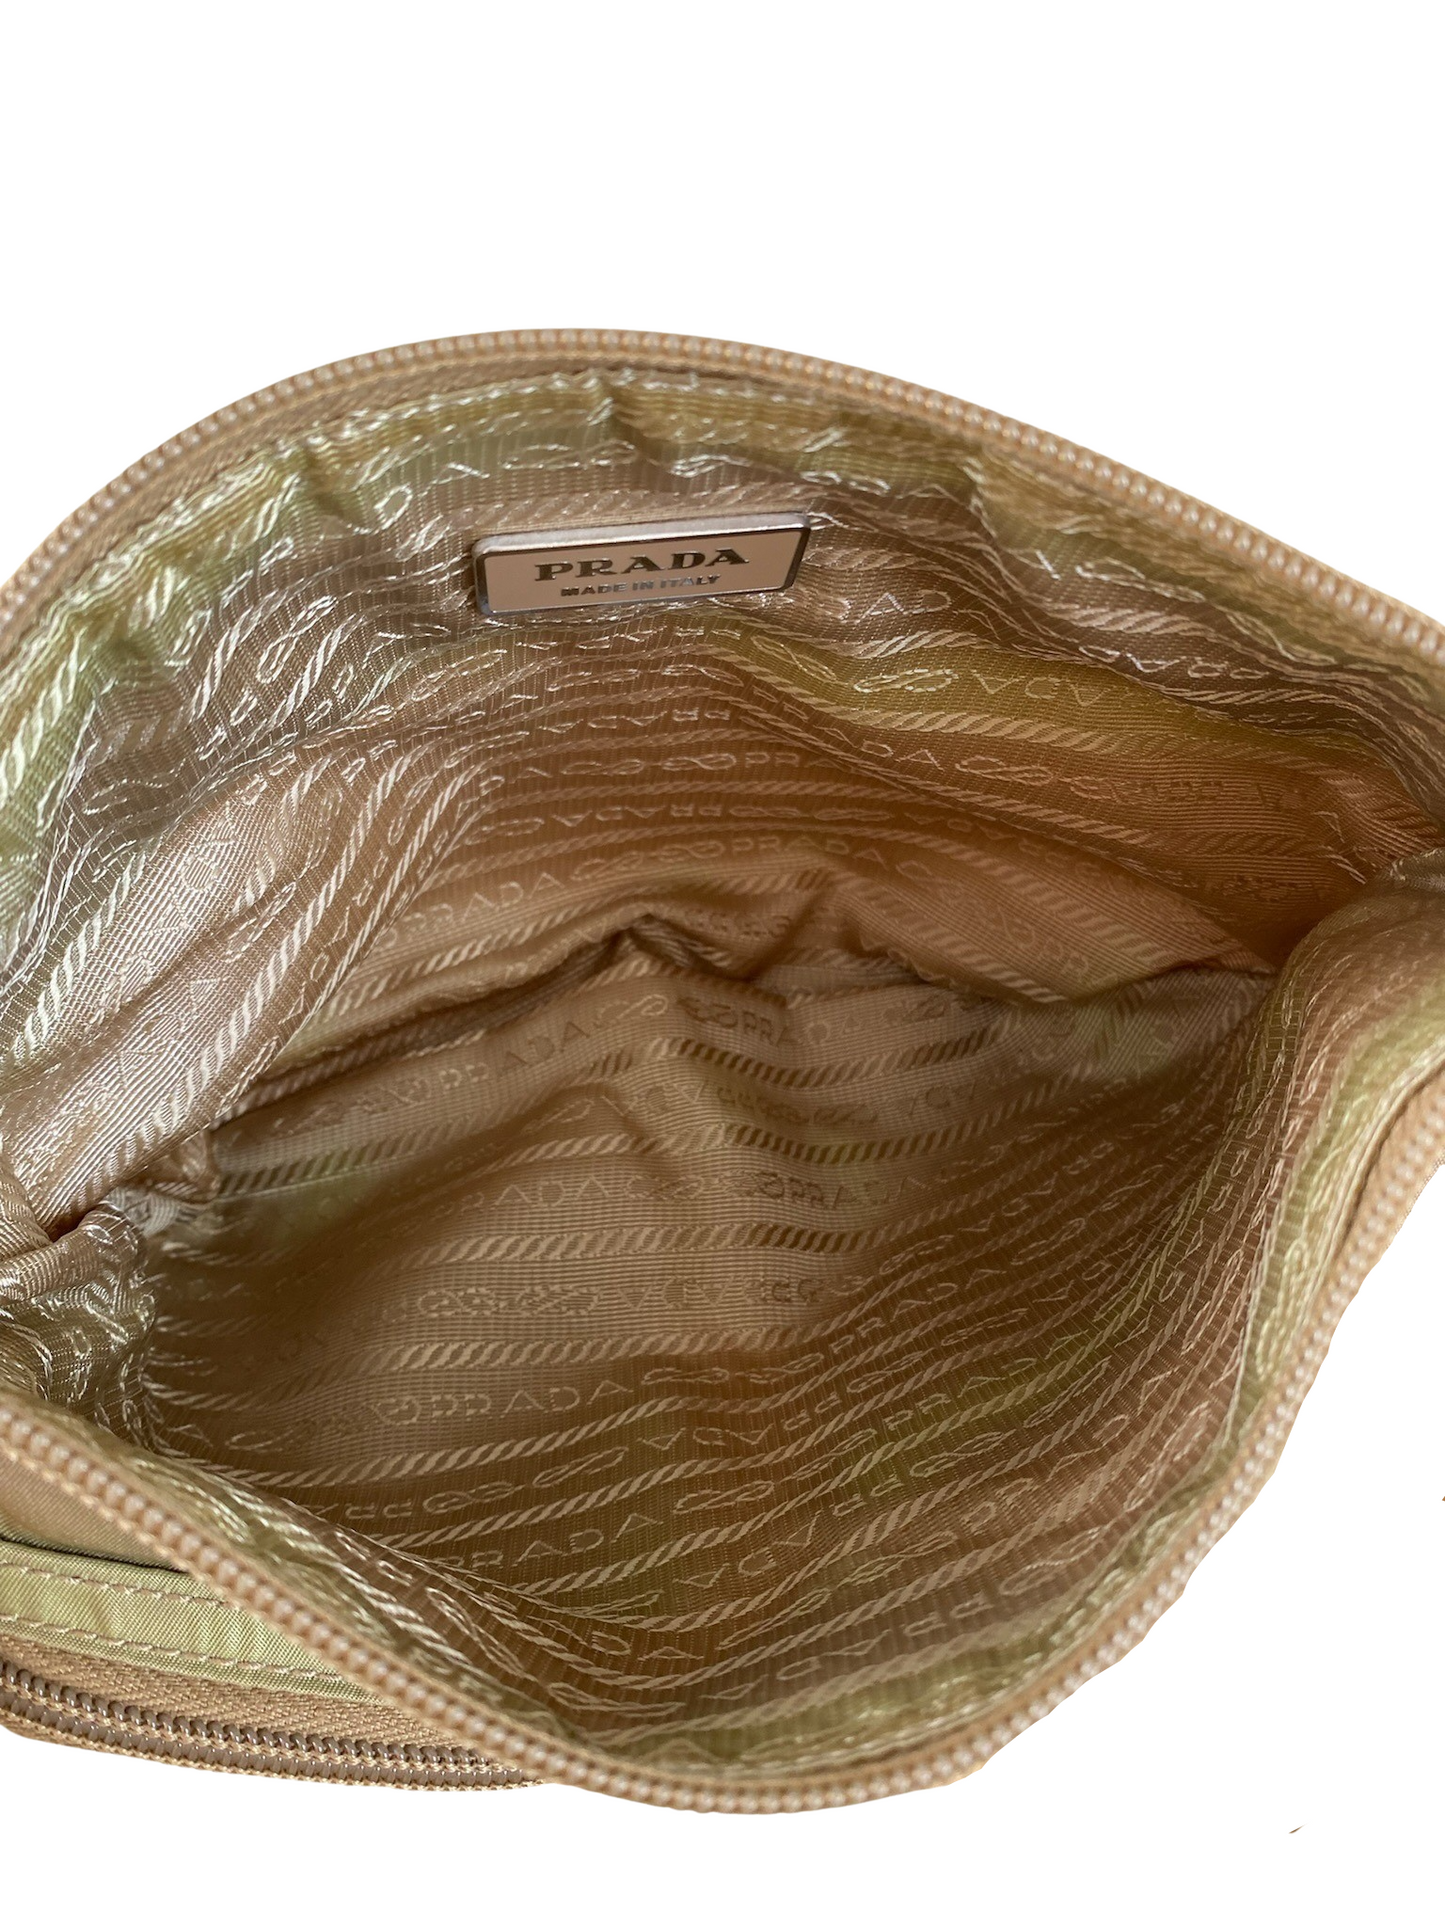 Prada Beige Nylon & Leather Bum Bag